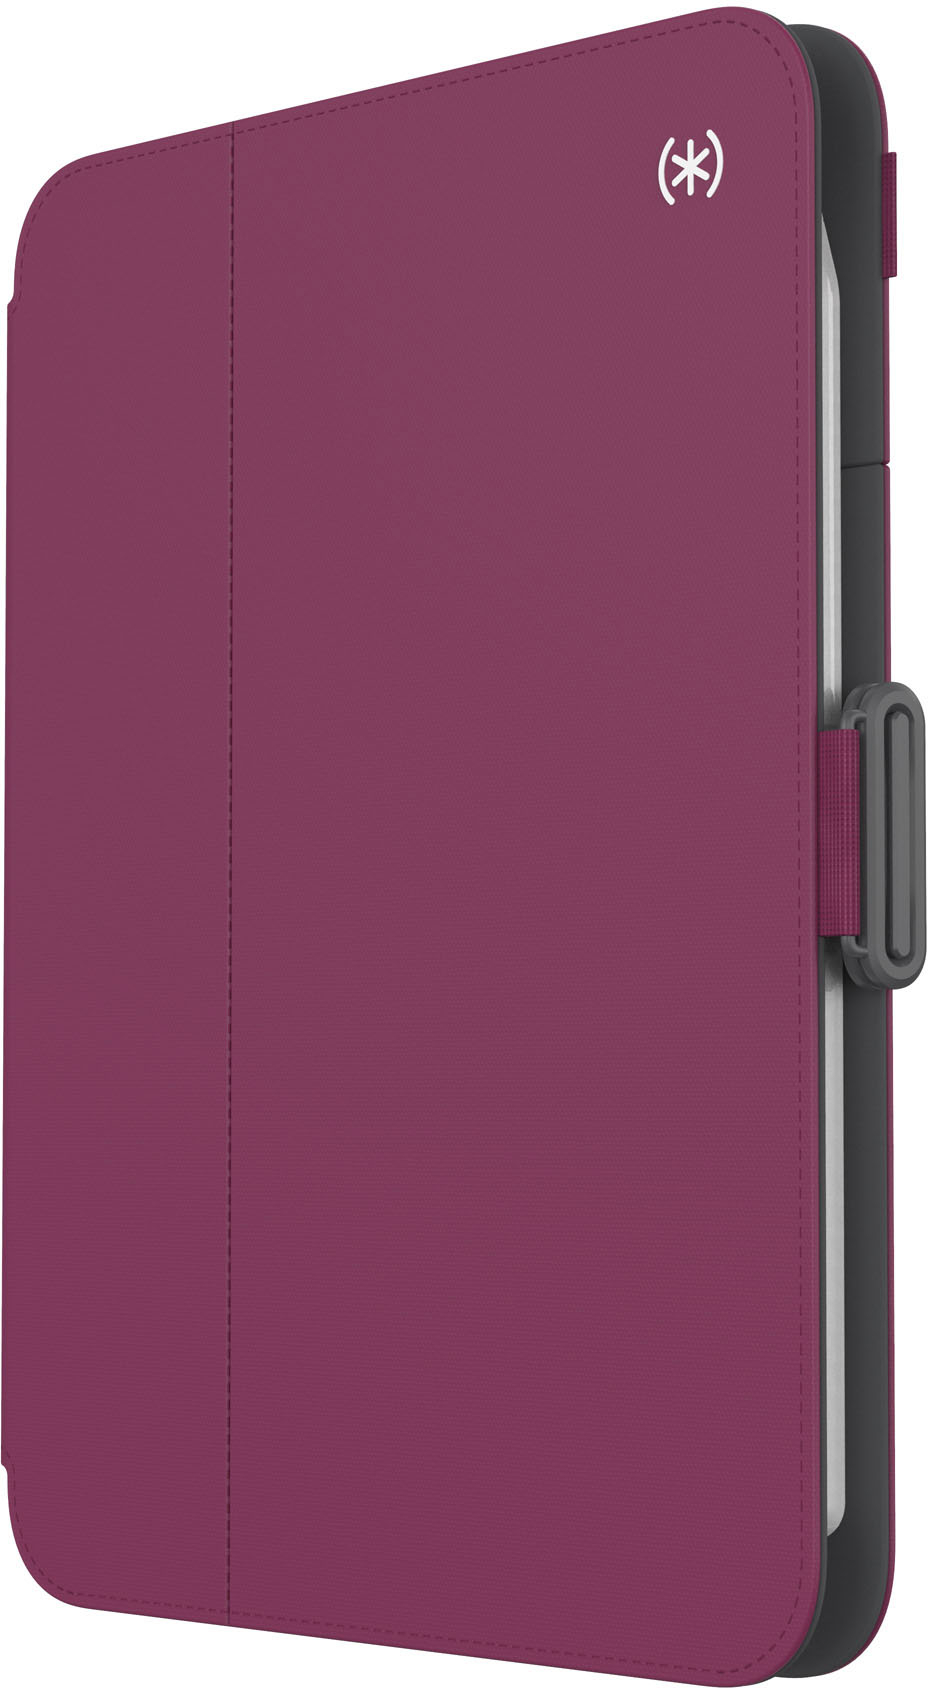 BASE Folio Case Hard Back Stand for IPAD 6 MINI (8.3) - Power Peak